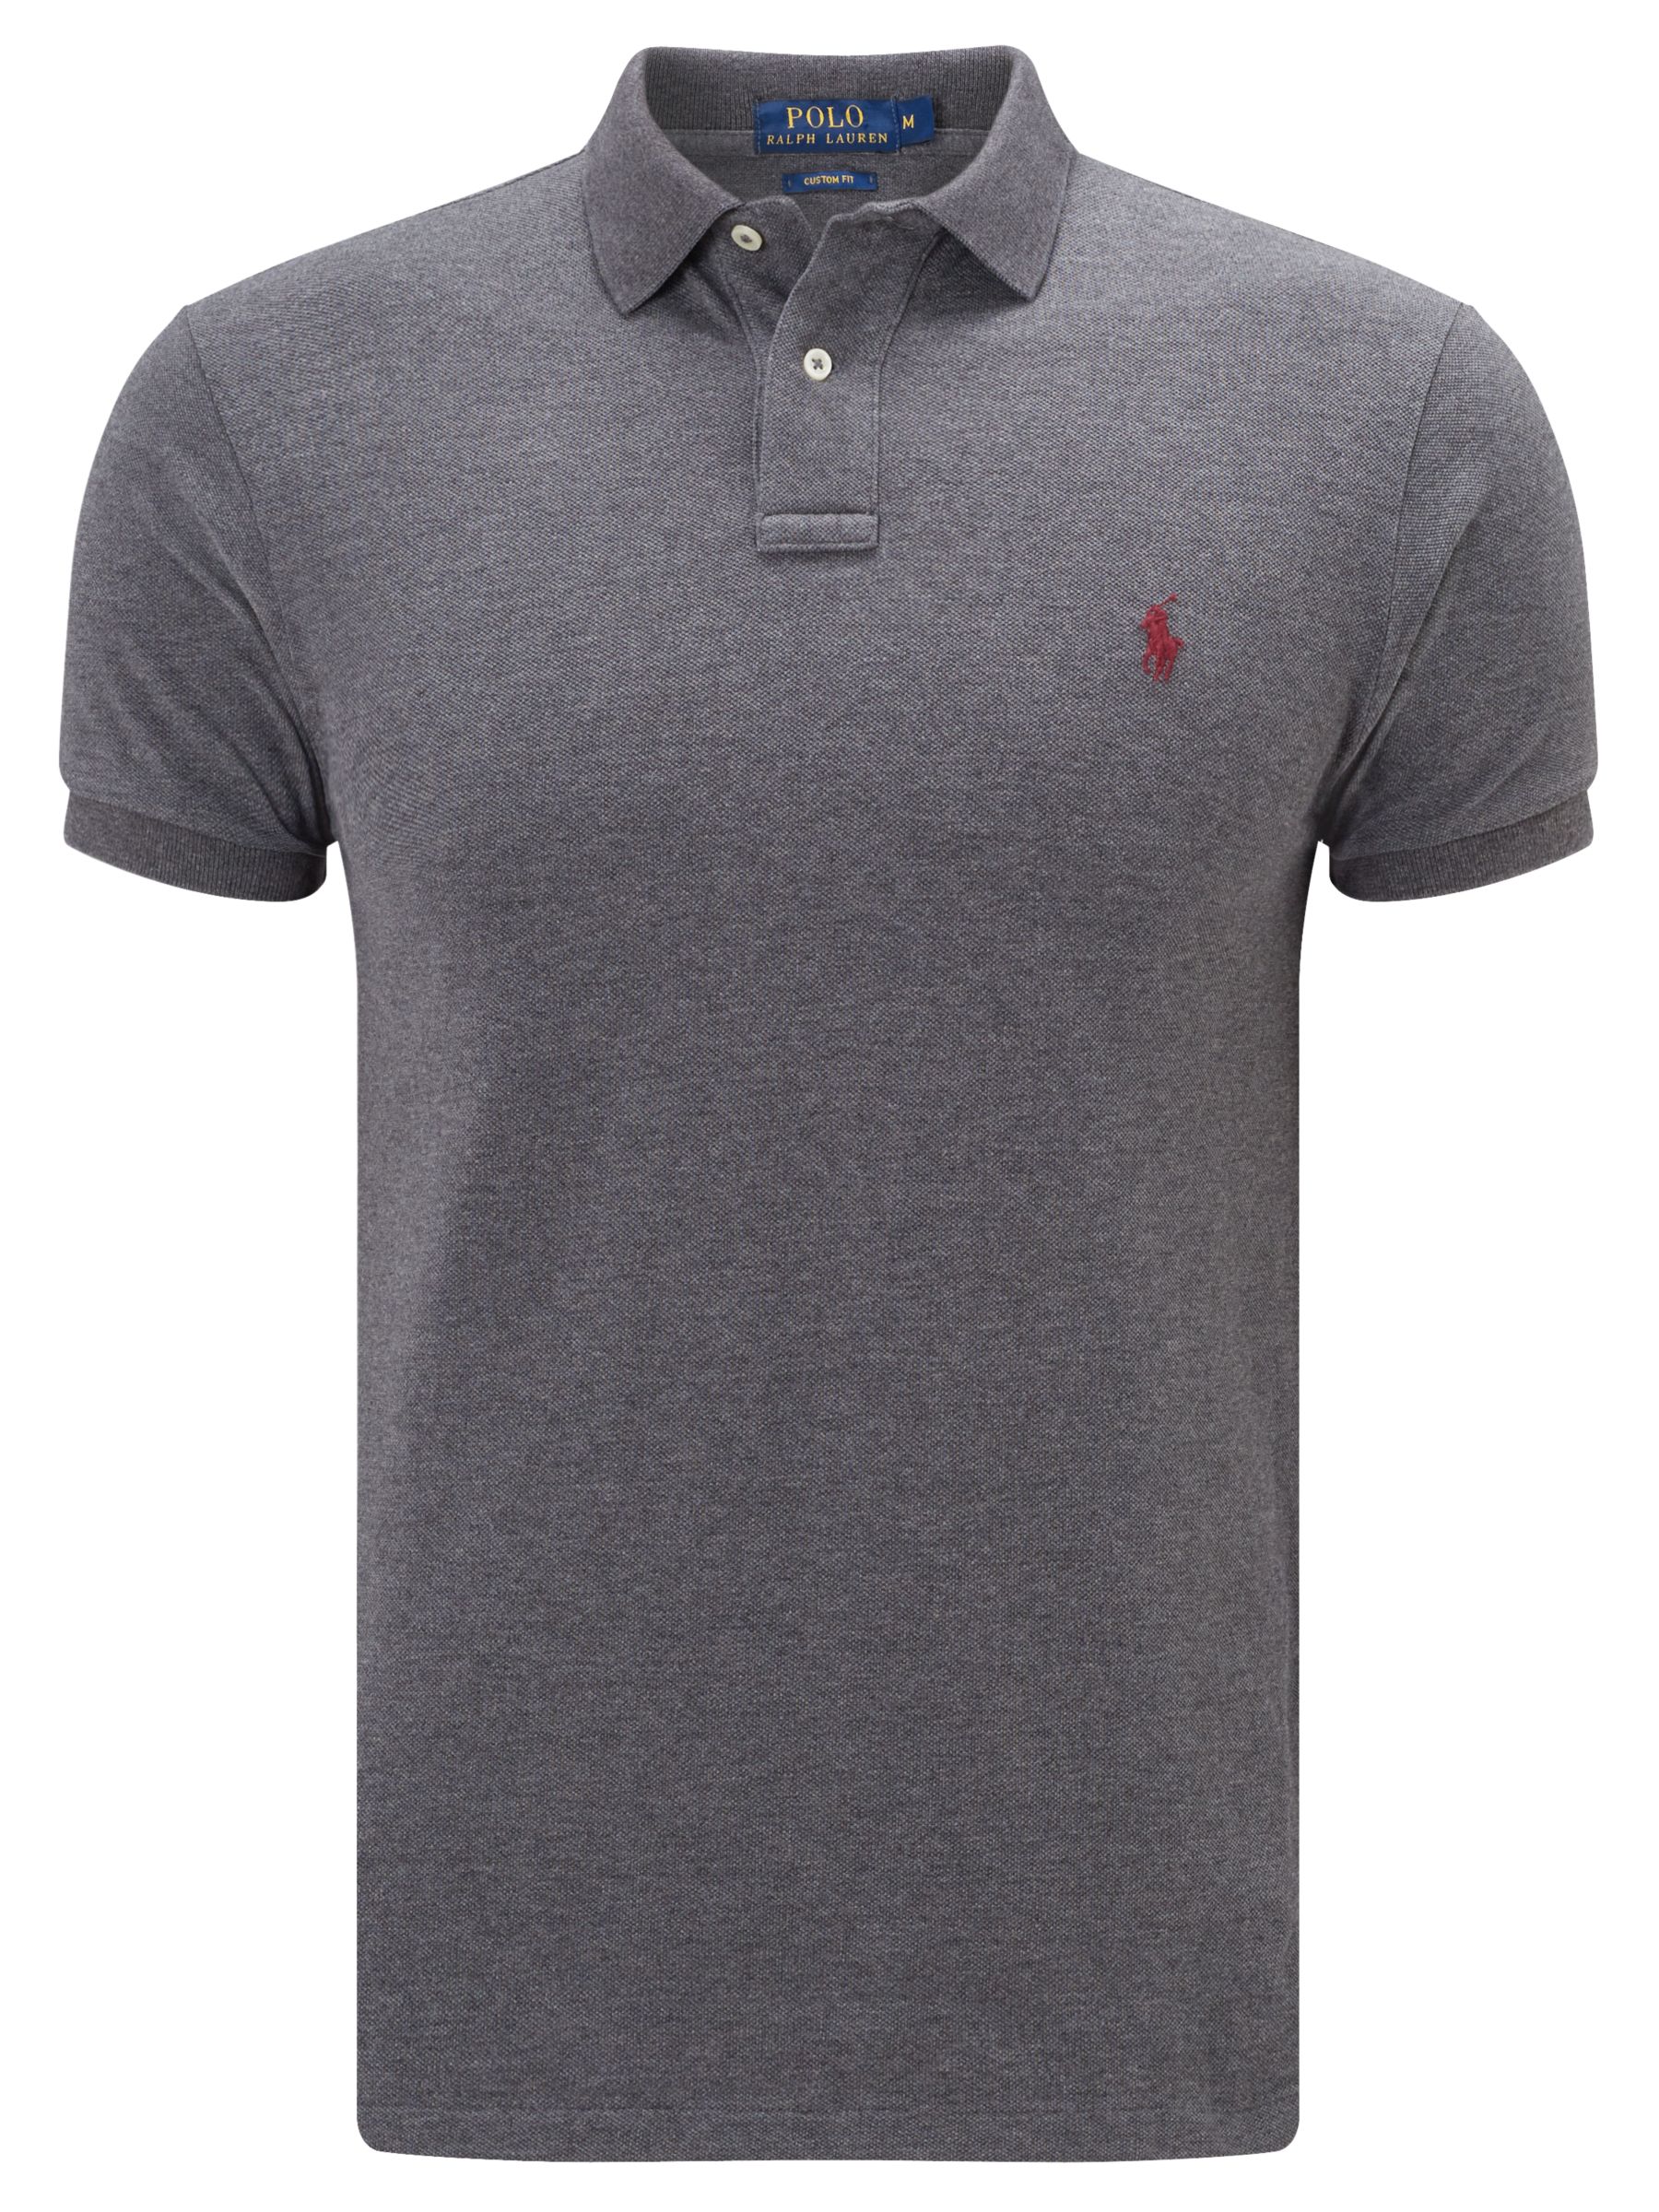 Men's polo shirts | Golf polo shirts | Designer polo shirts | John Lewis